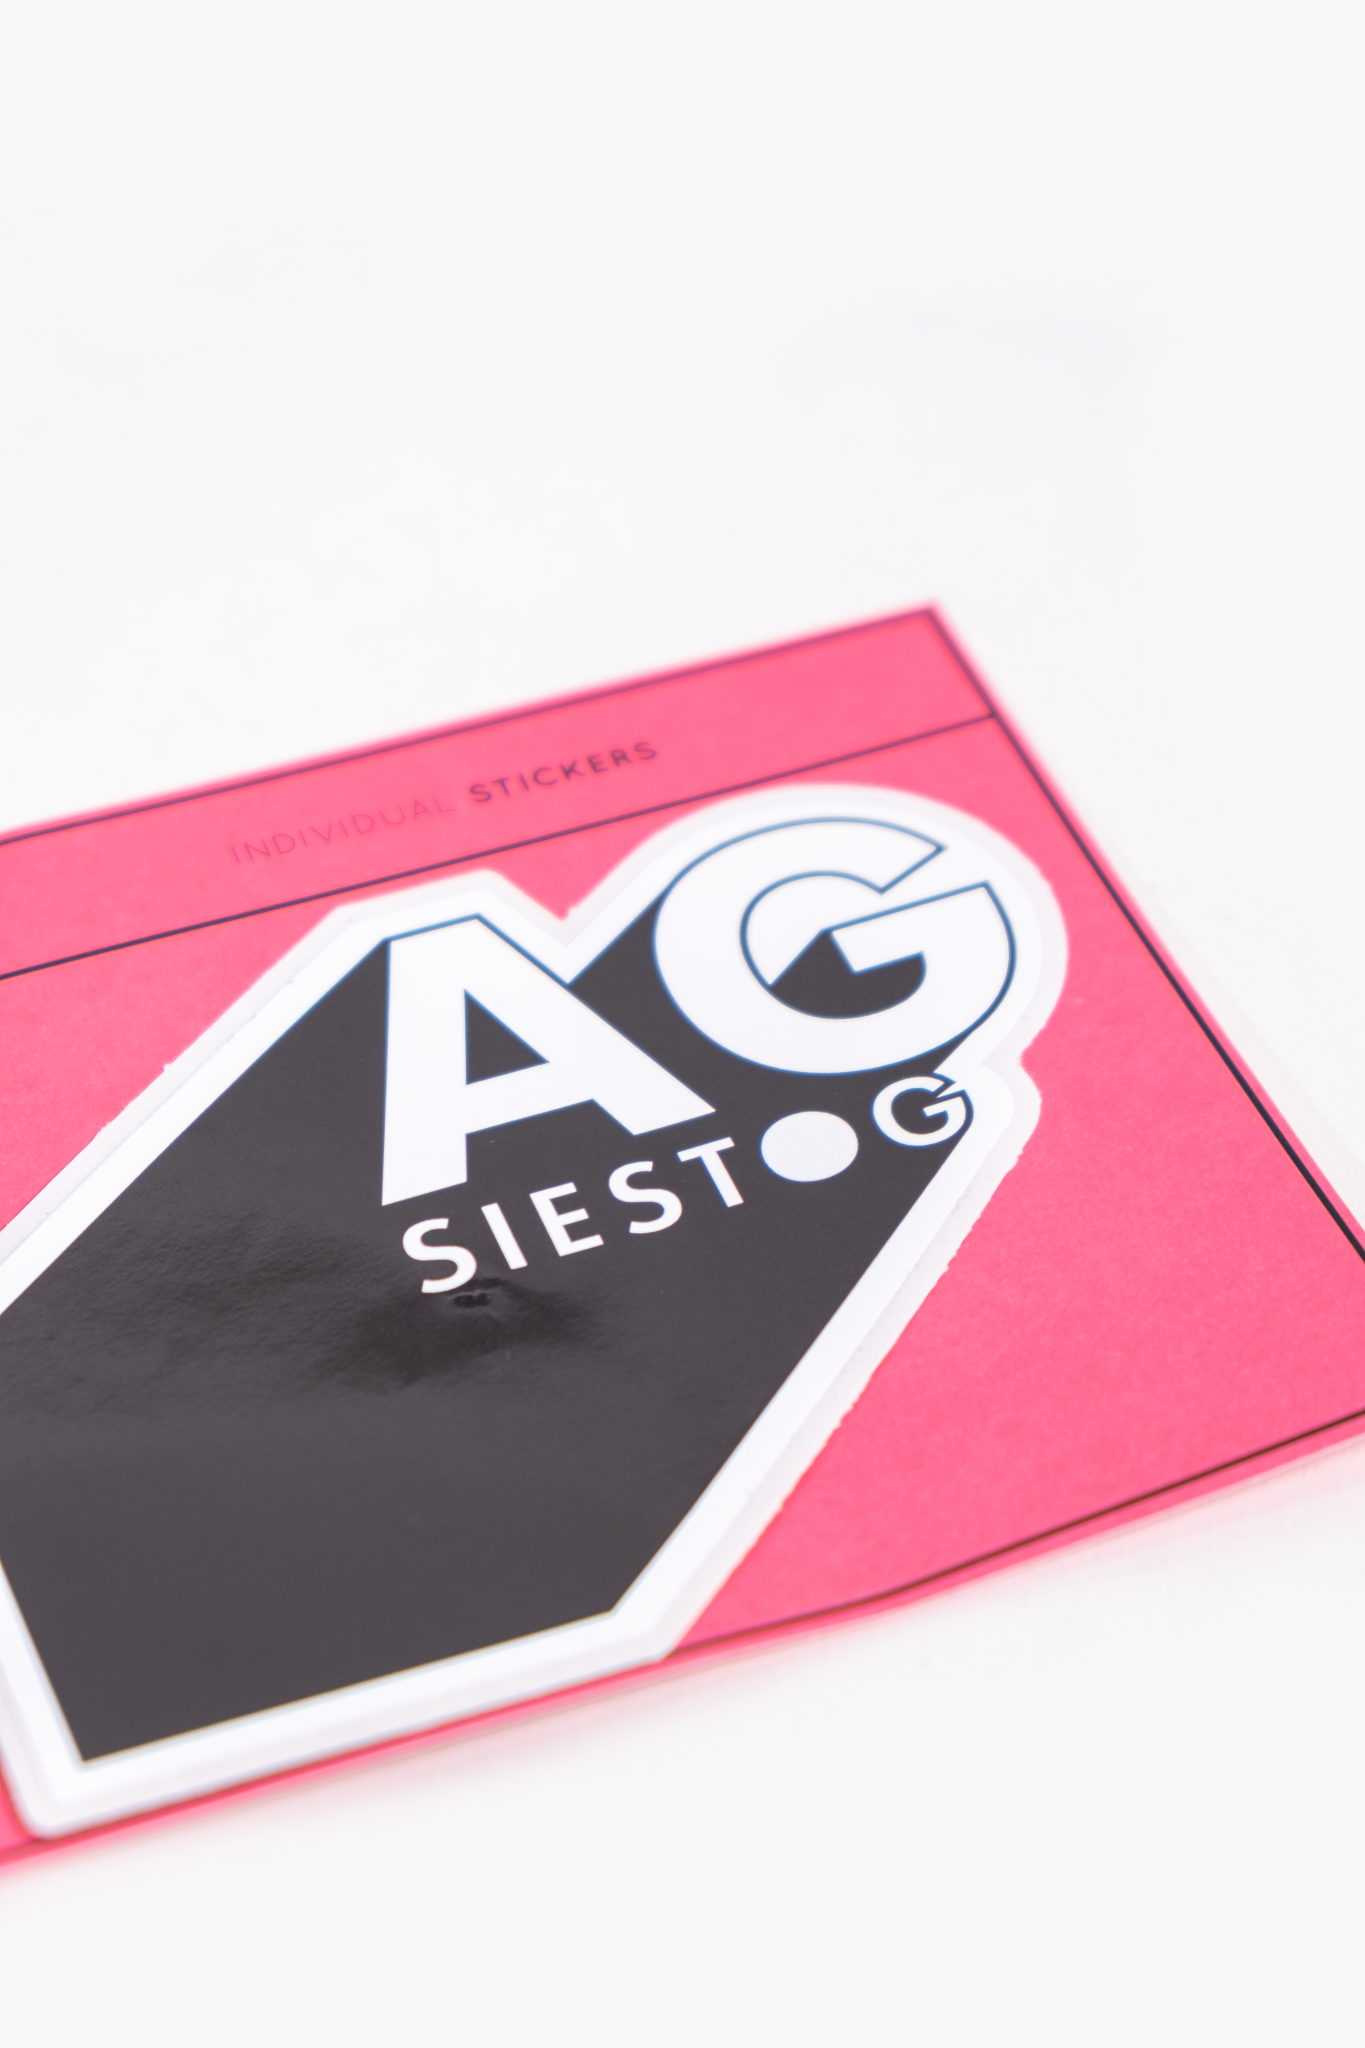 Ag Siestog Stickers